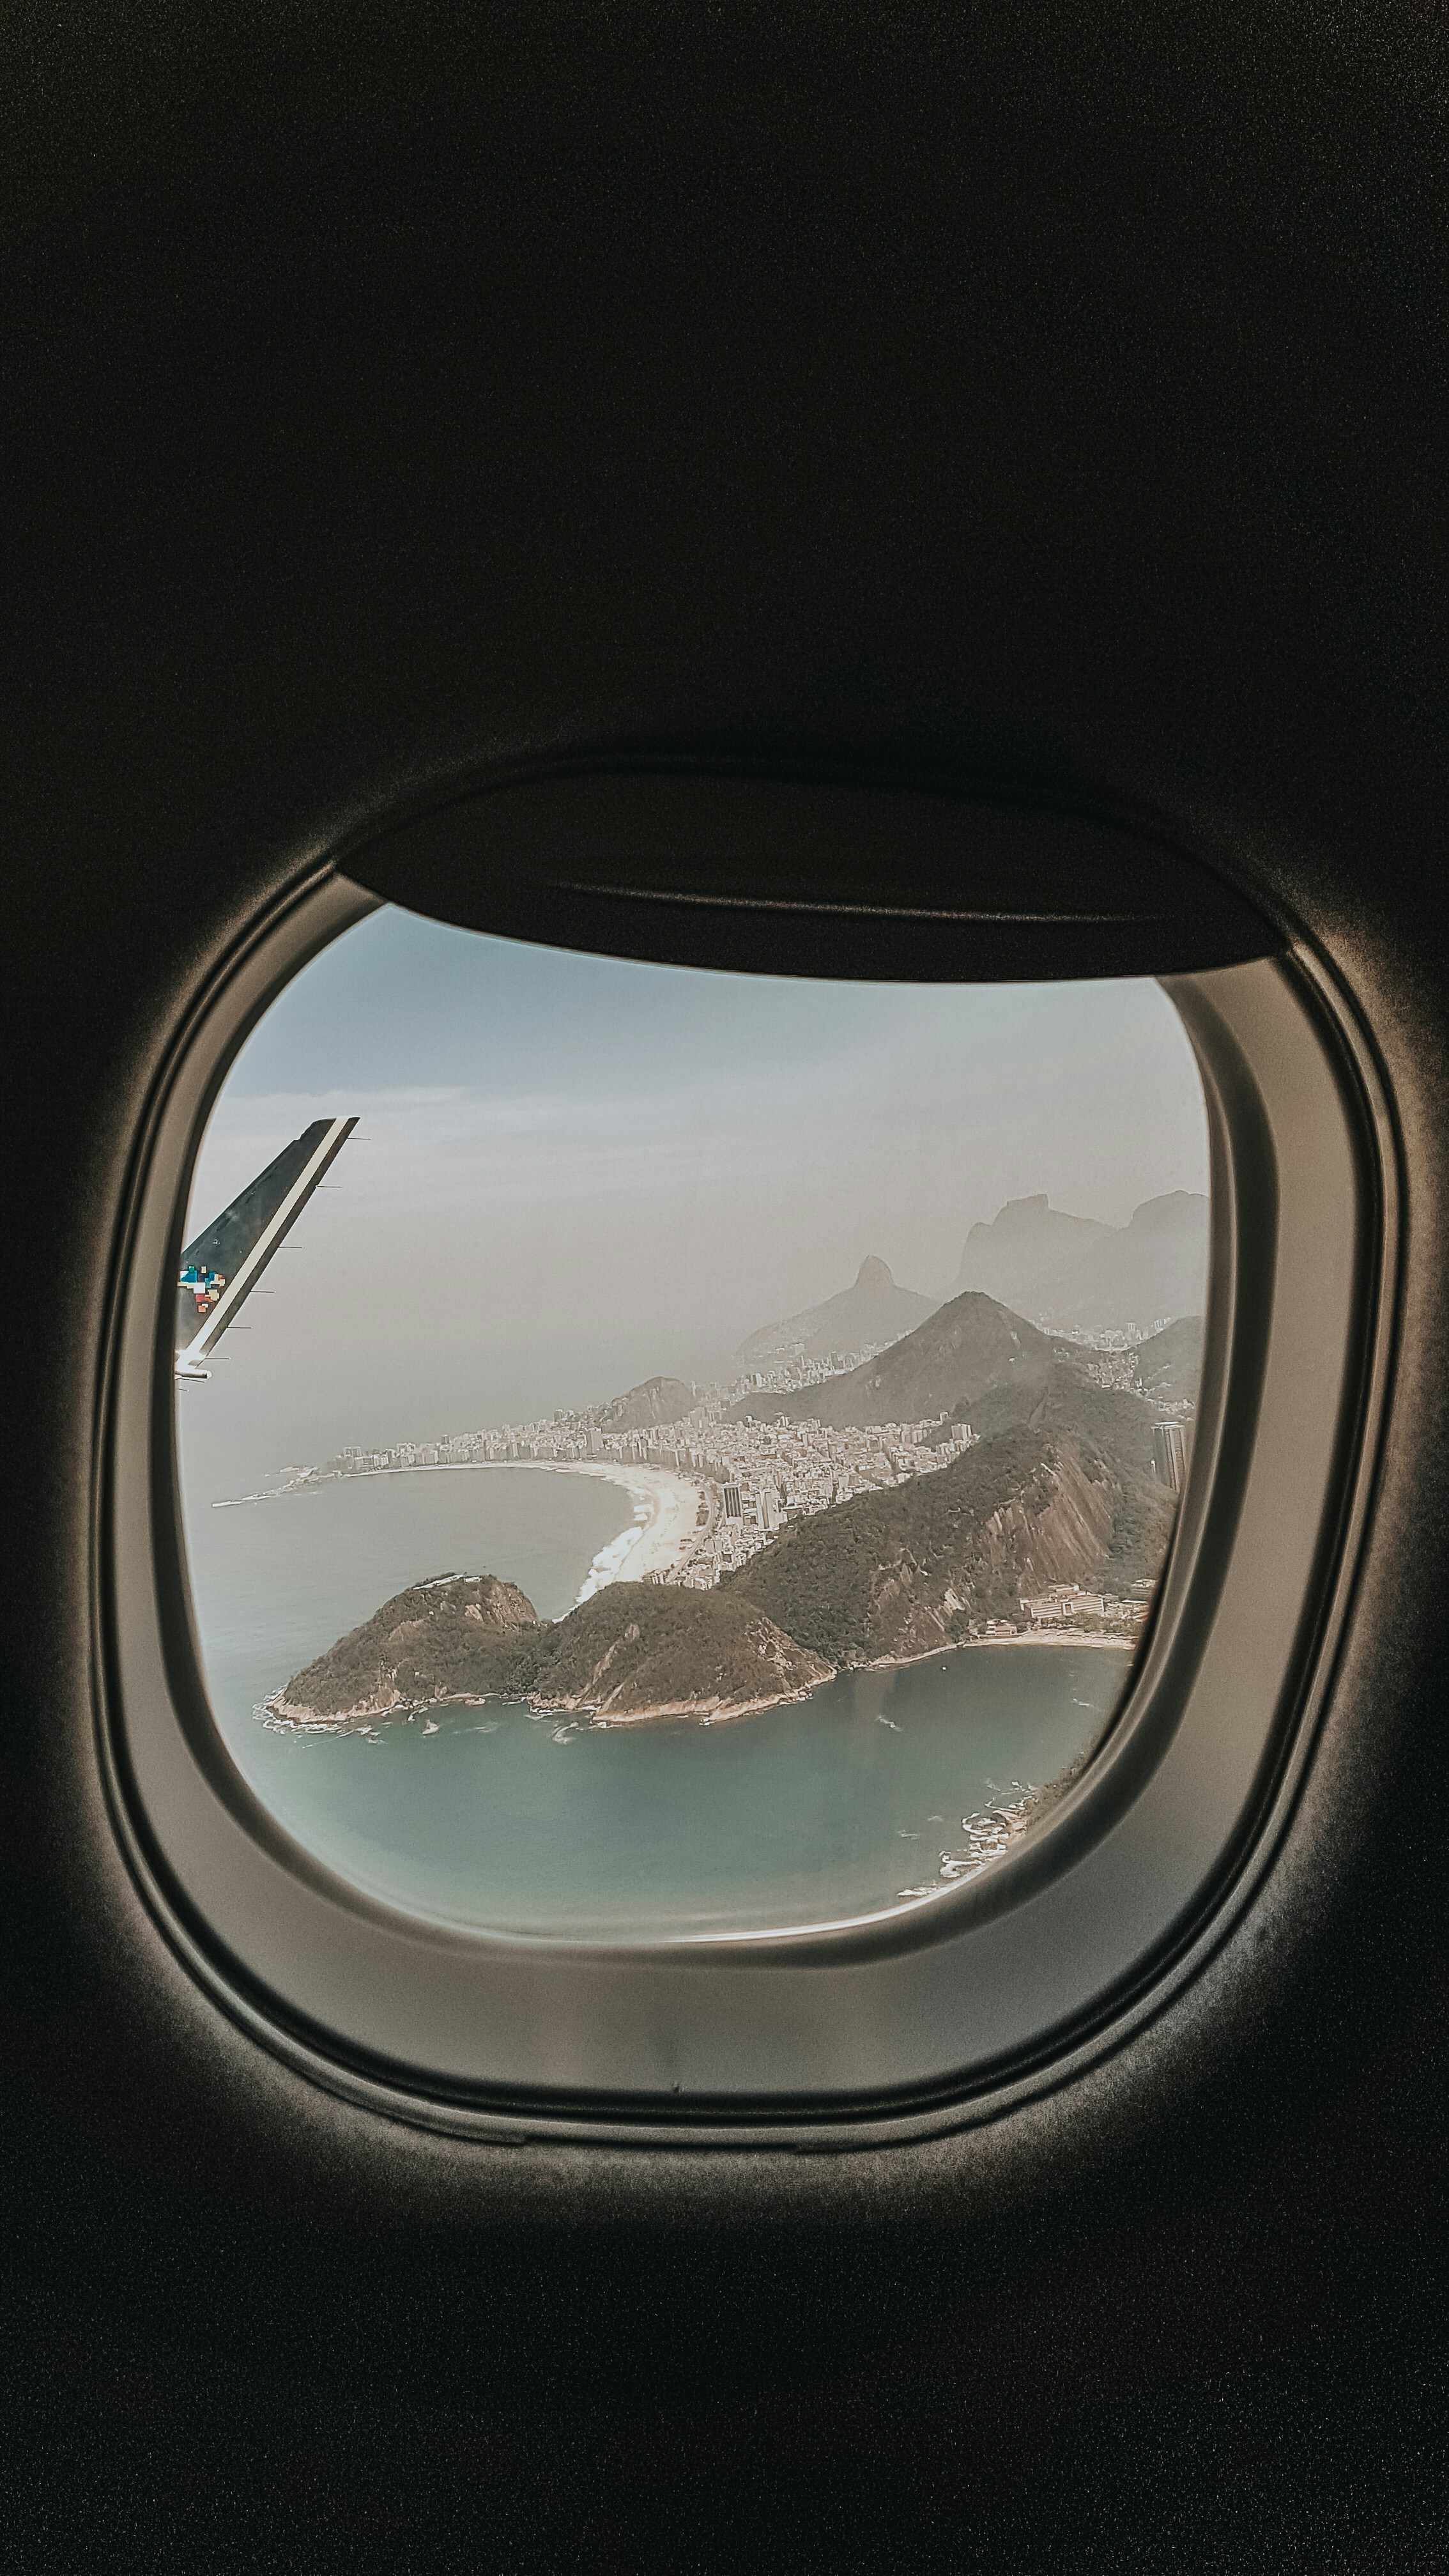 Rio de Janeiro from a plane